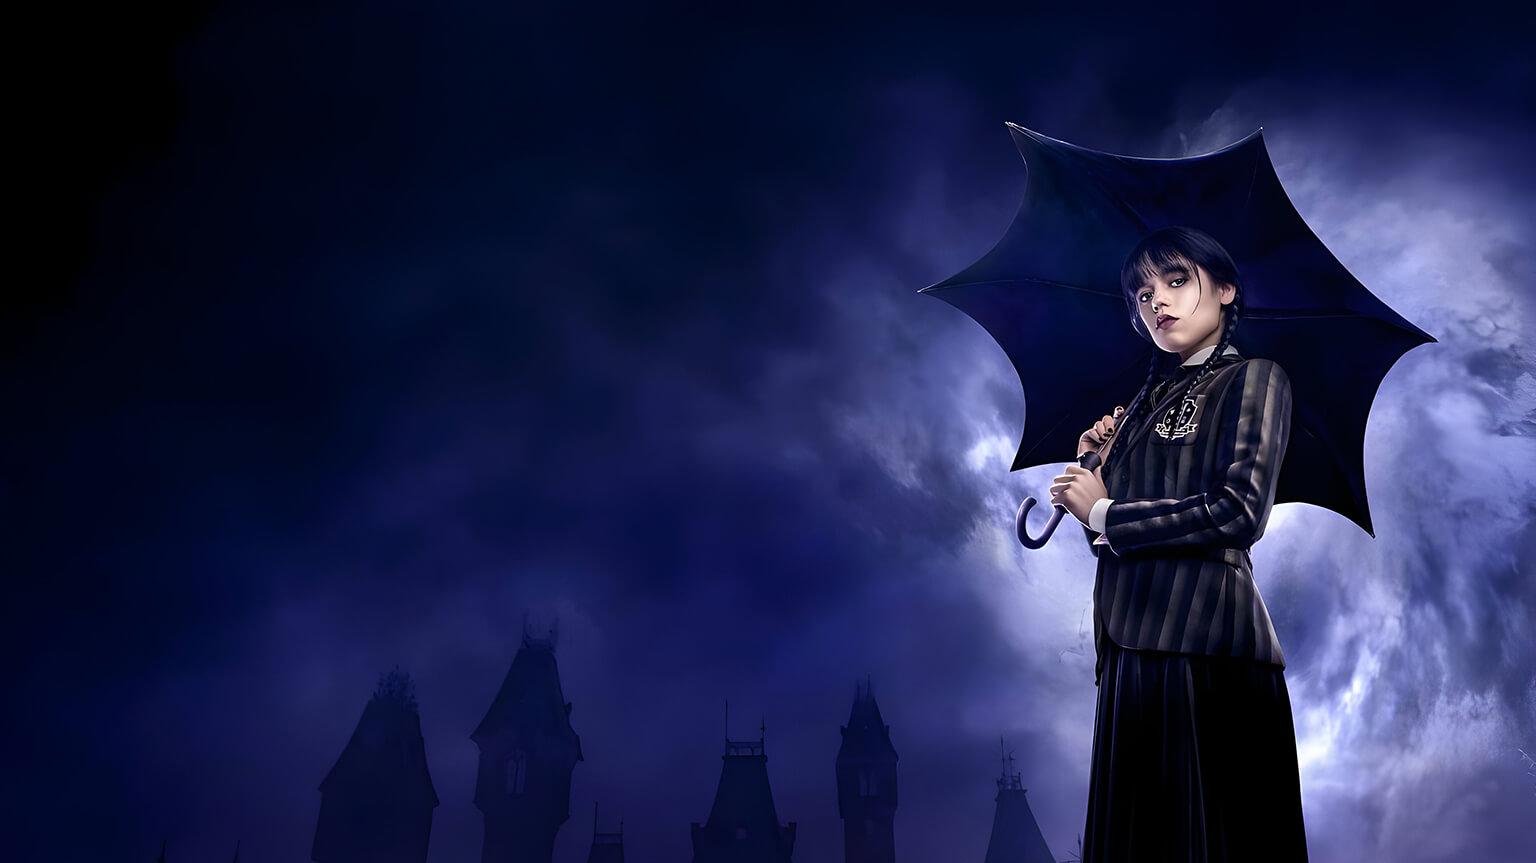 Wednesday Addams With Umbrella Purple Desktop Wallpaper 4k